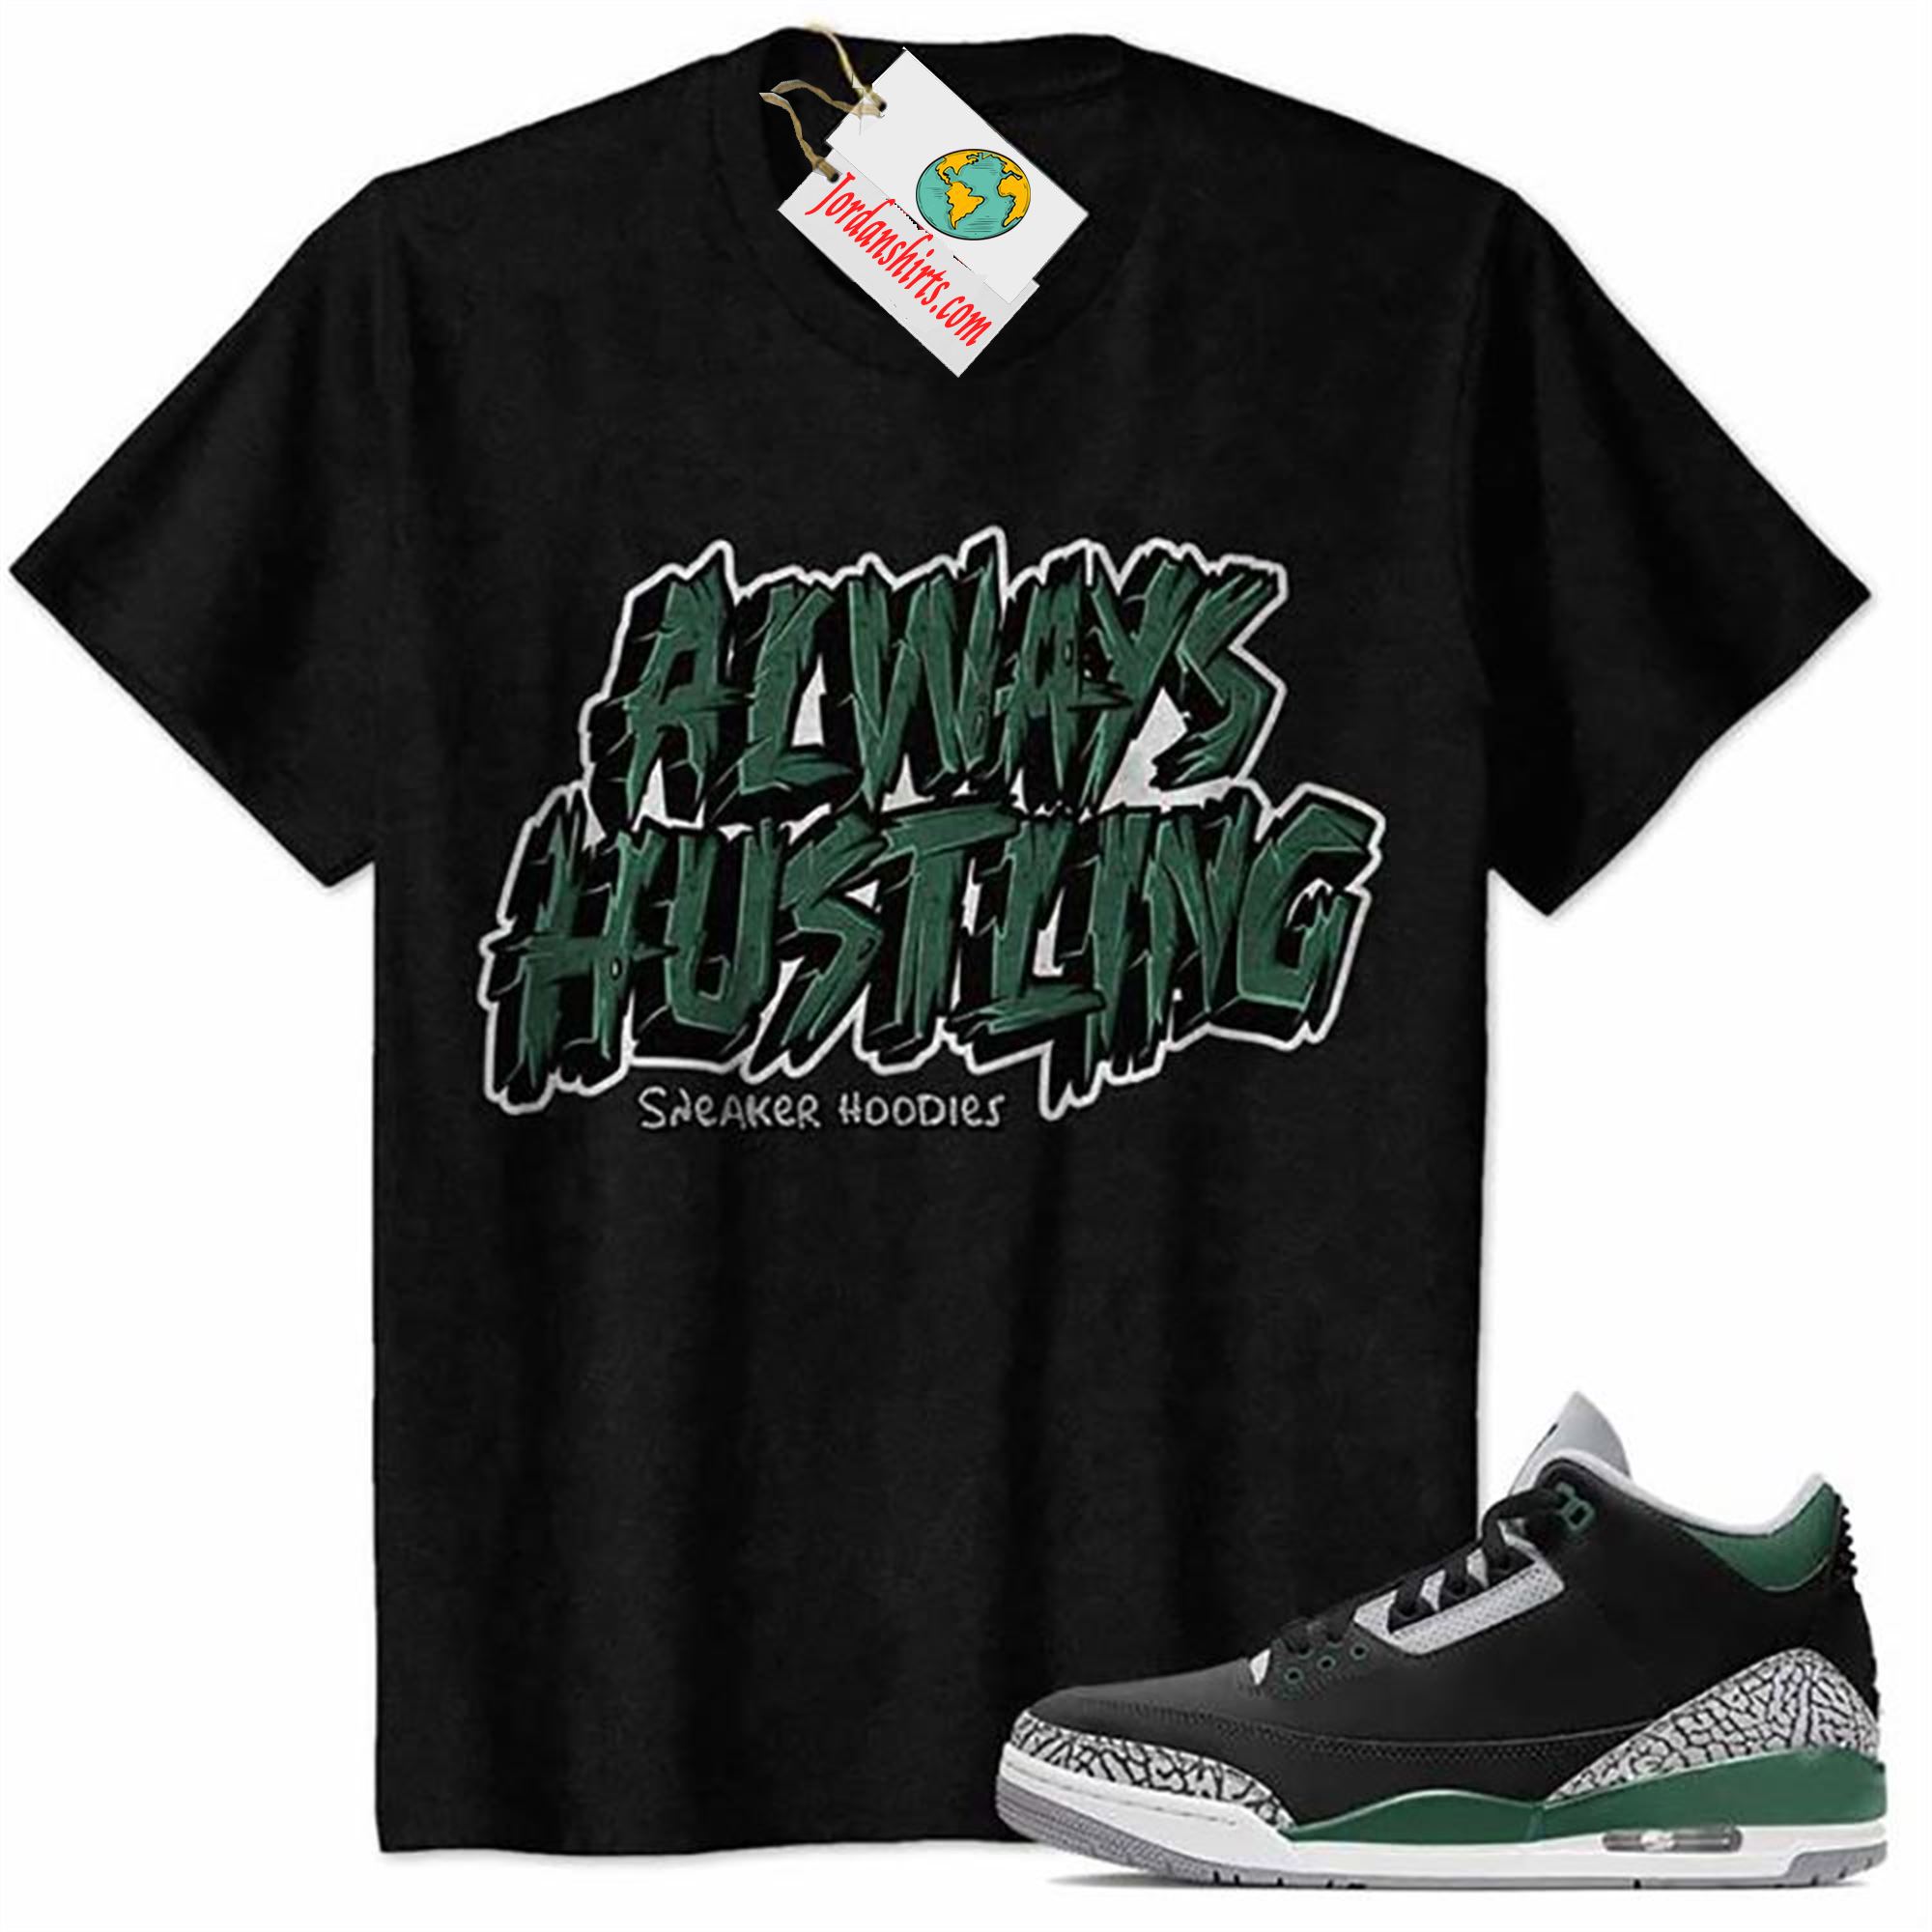 Jordan 3 Shirt, Allway Hustling Hustle Black Air Jordan 3 Pine Green 3s Plus Size Up To 5xl